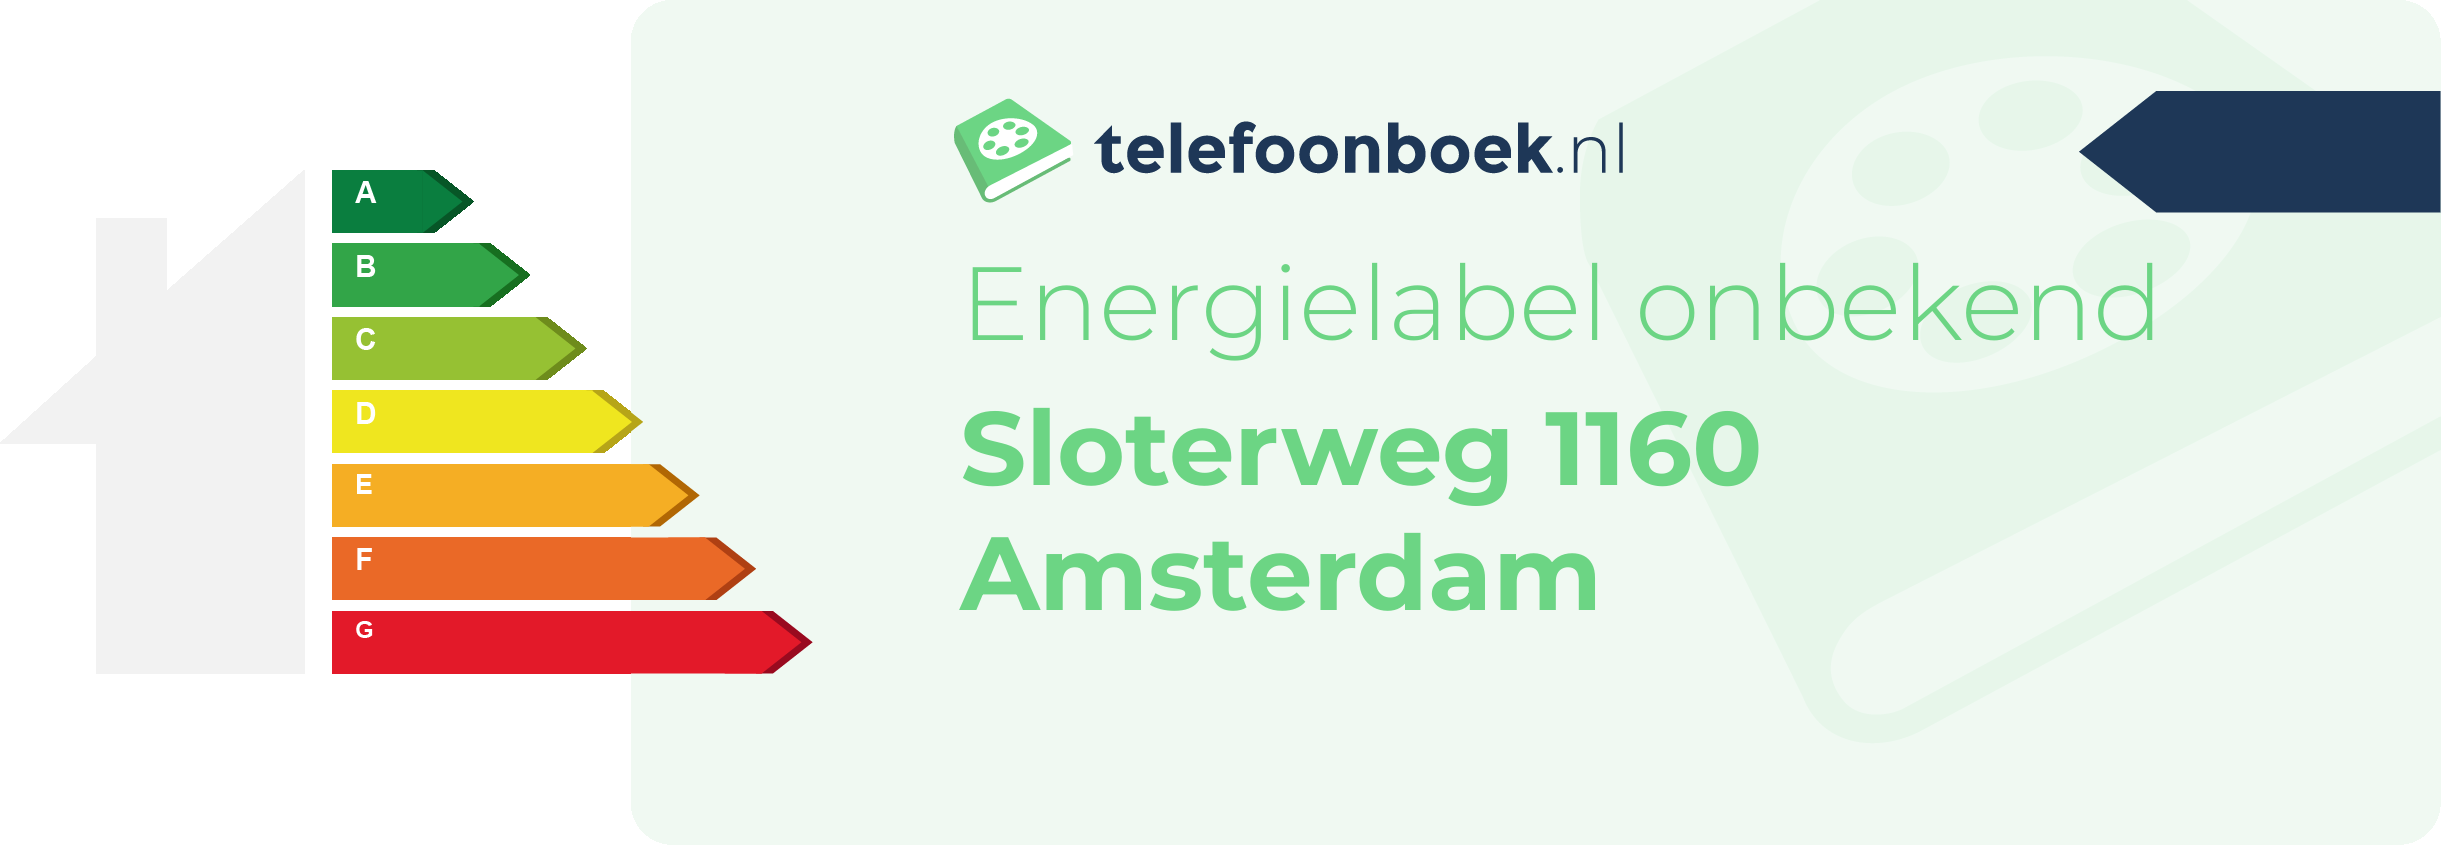 Energielabel Sloterweg 1160 Amsterdam